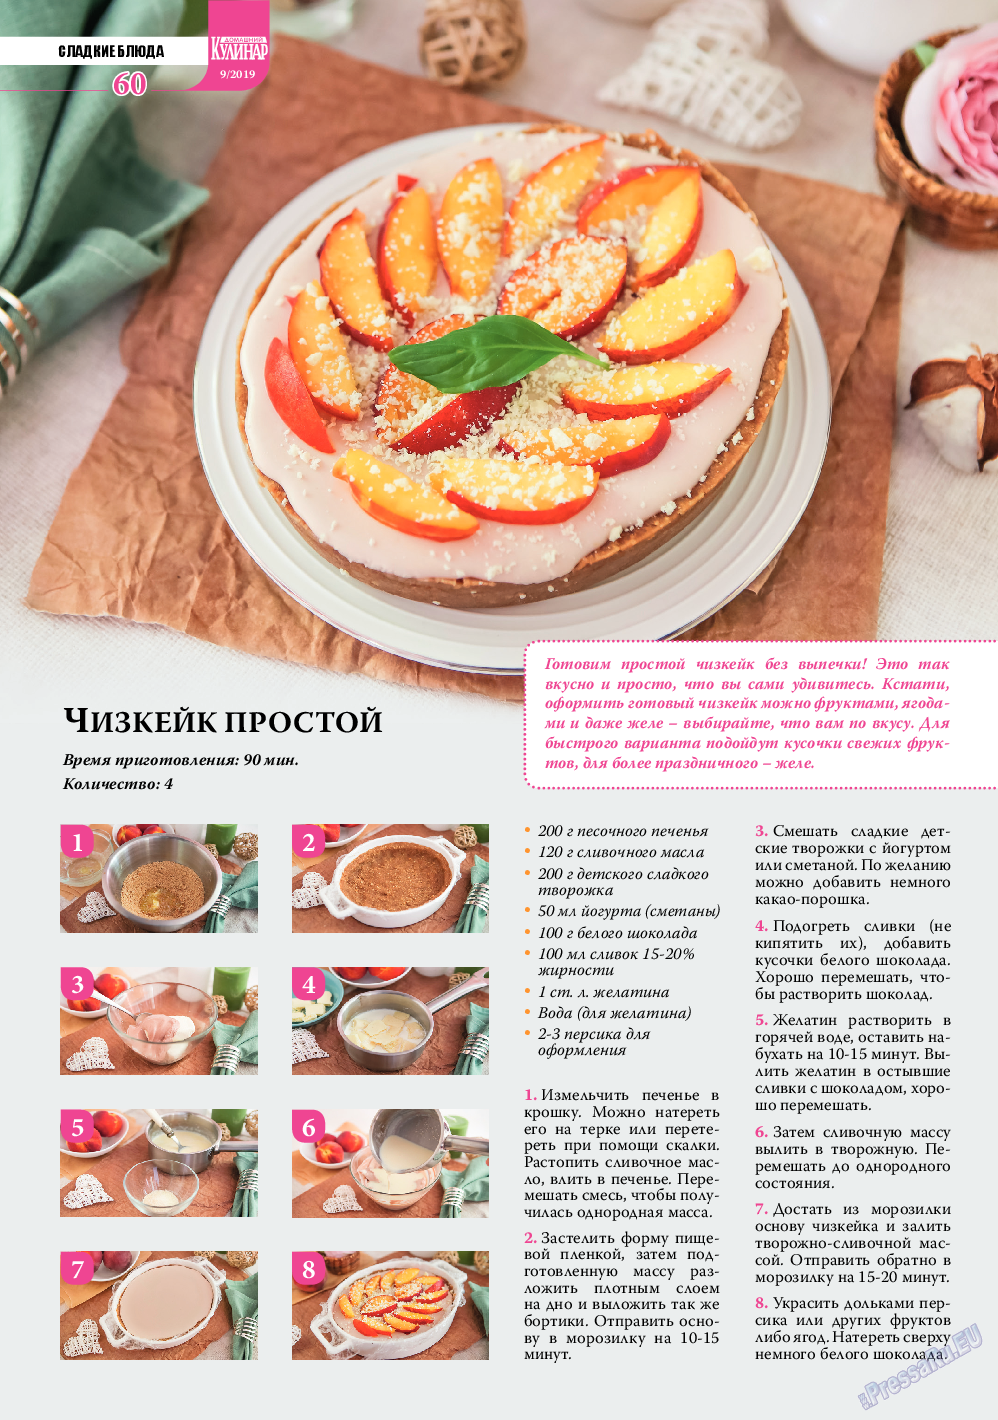 Домашний кулинар (журнал). 2019 год, номер 9, стр. 60